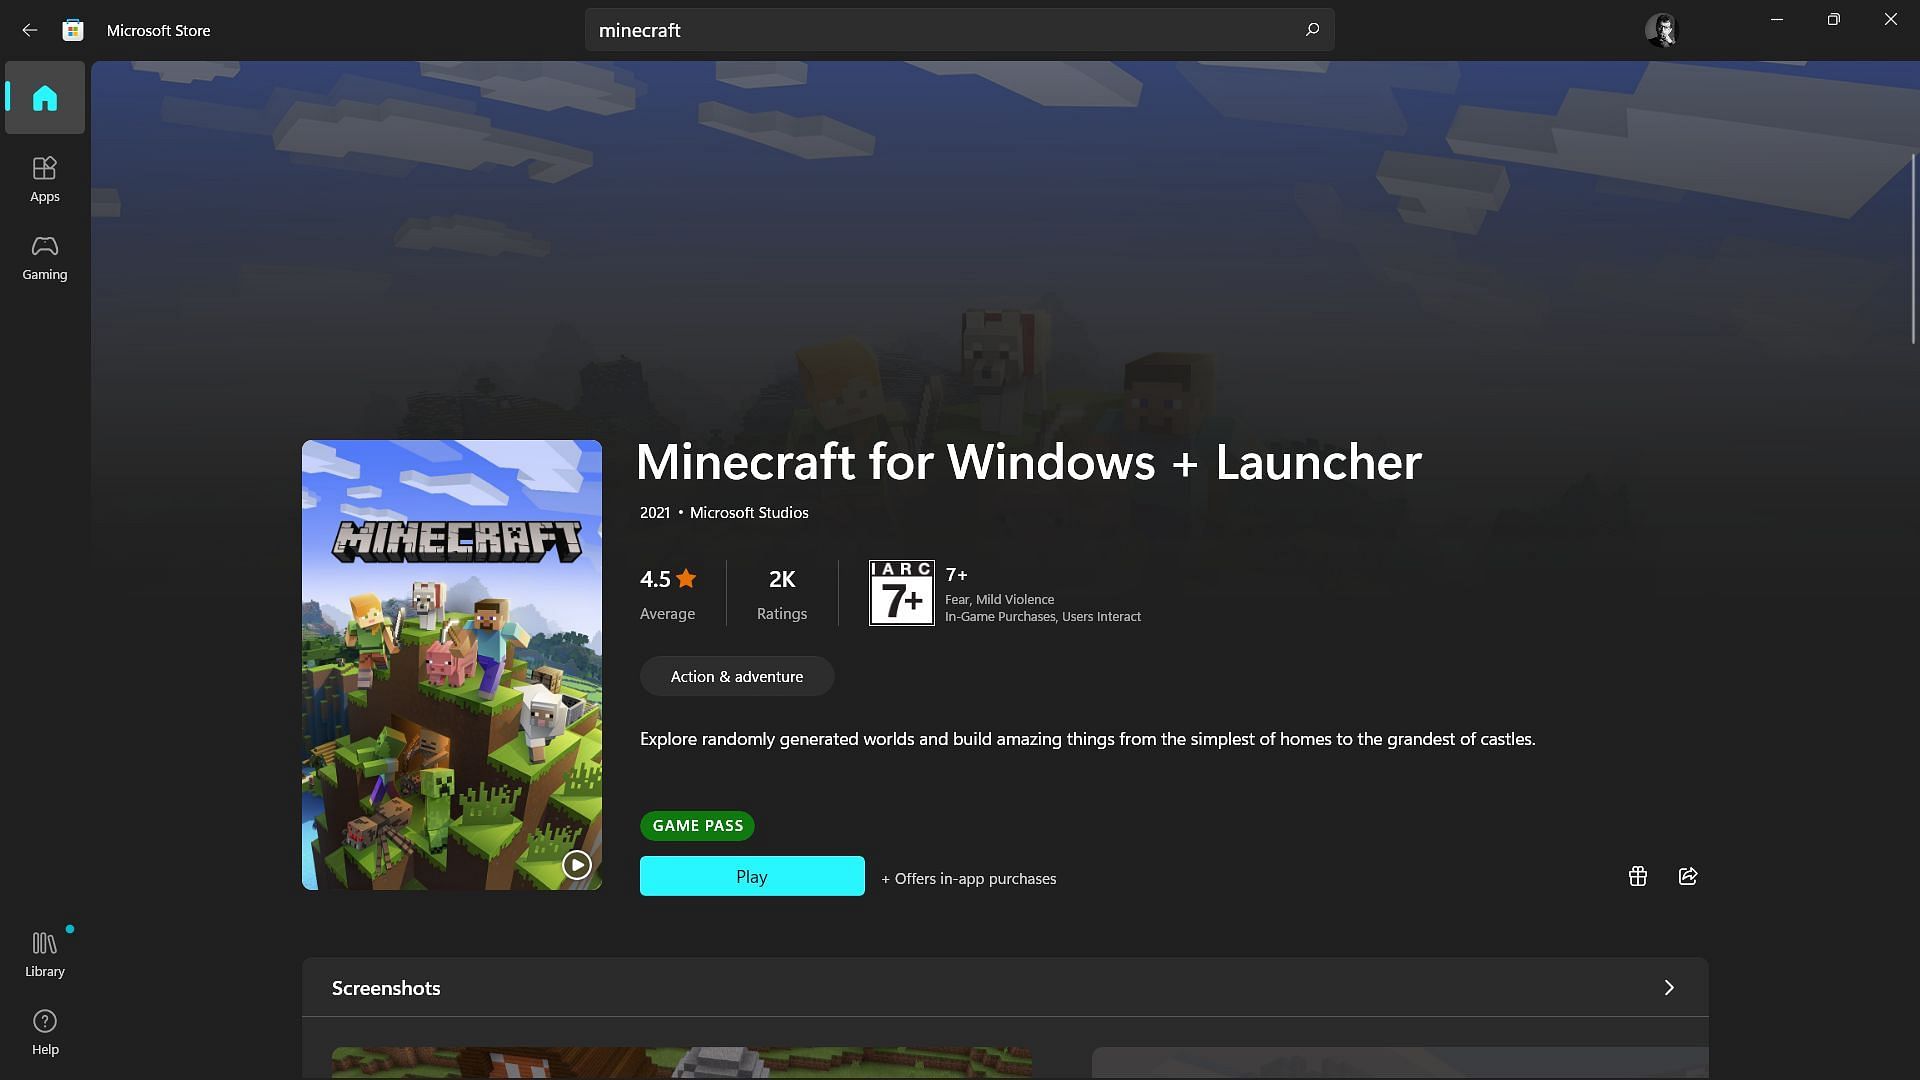 Bedrock Edition launcher more on Microsoft store (Image via Sportskeeda)